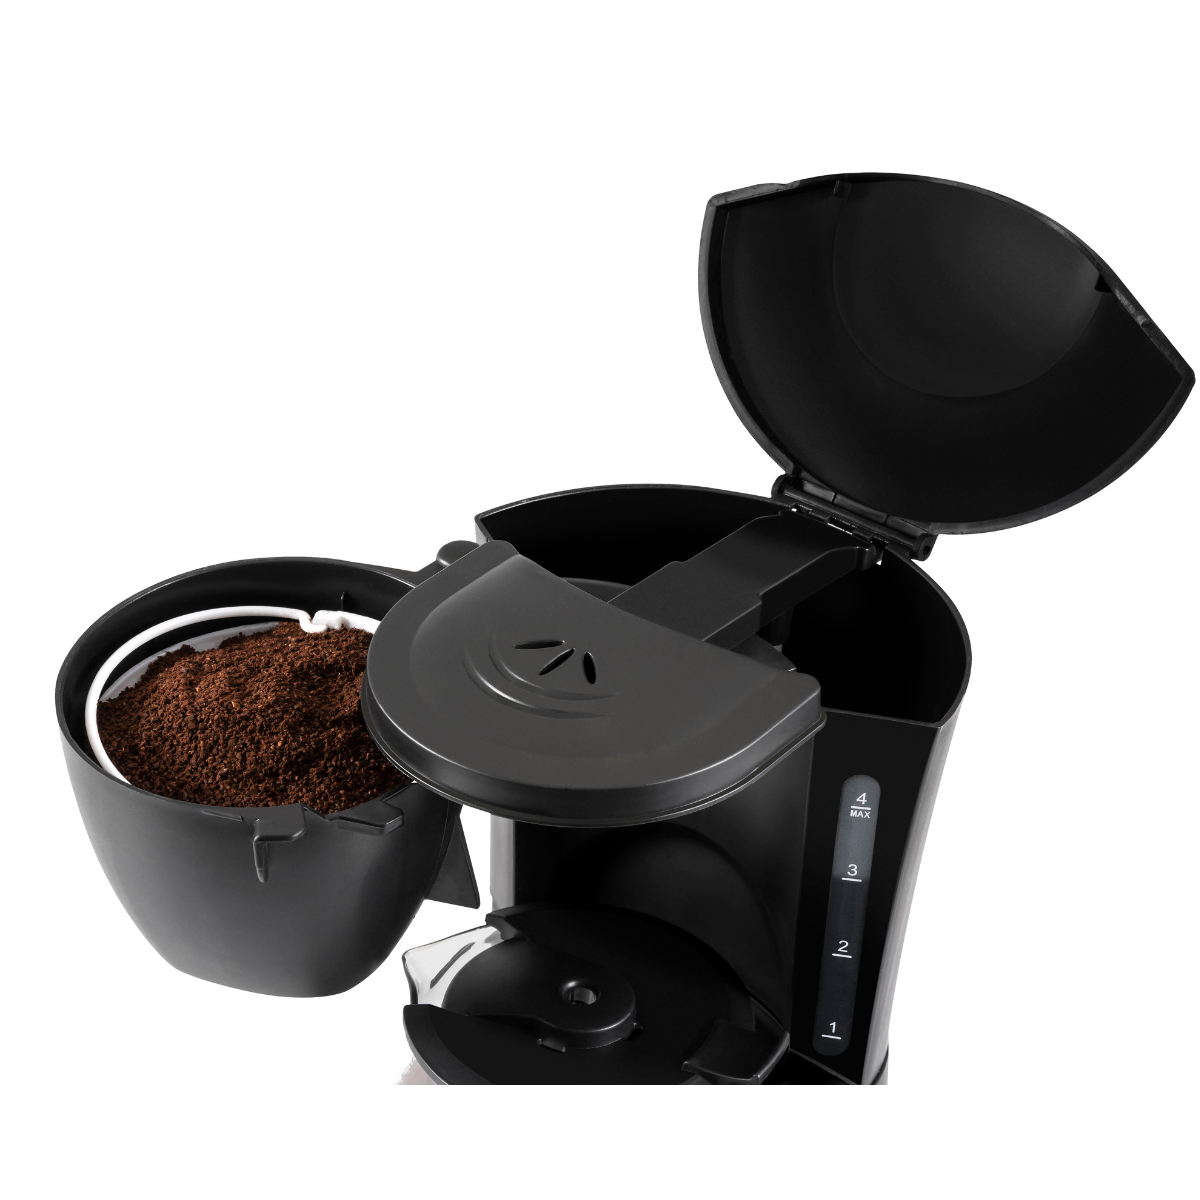 Personal Drip Coffee Maker CKM-204 N